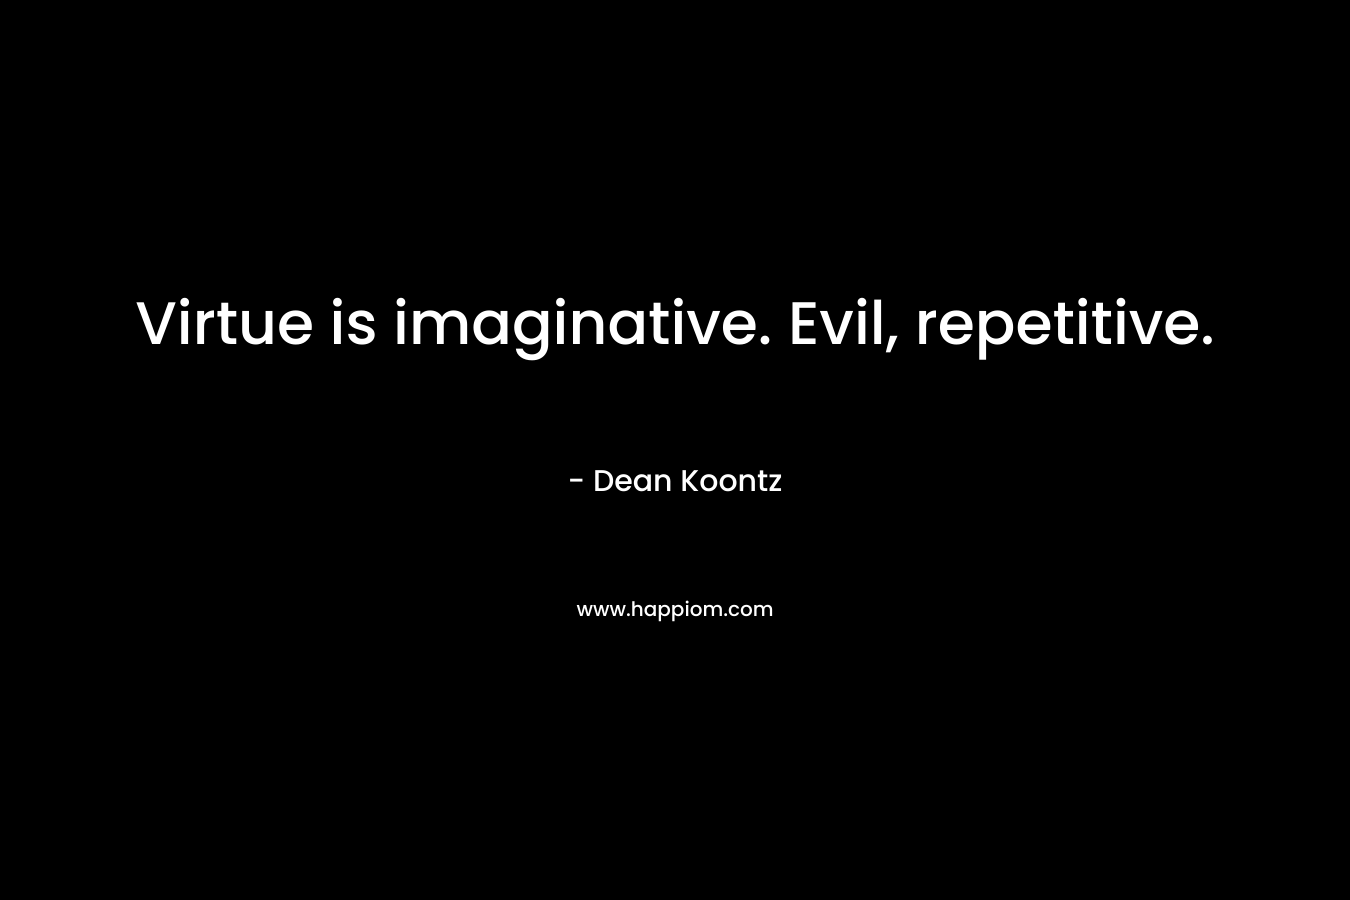 Virtue is imaginative. Evil, repetitive.